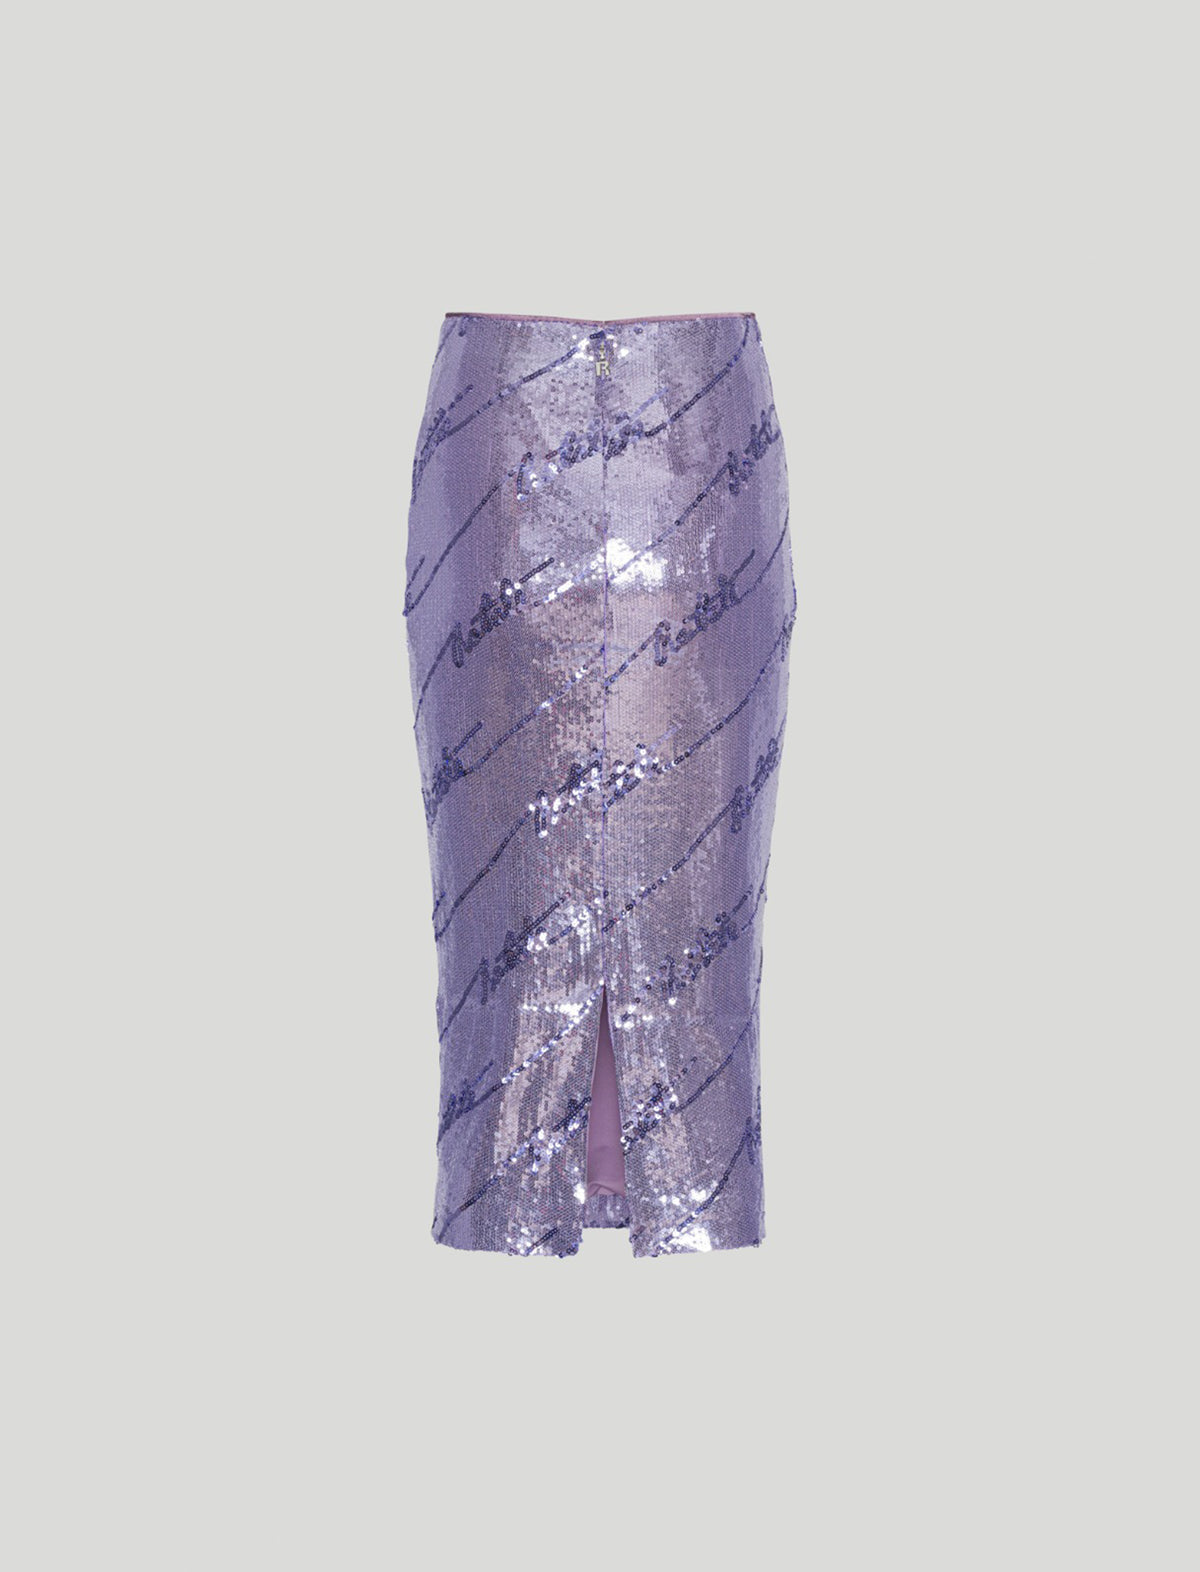 ROTATE BIRGER CHRISTENSEN Sequined Pencil Skirt in Violet